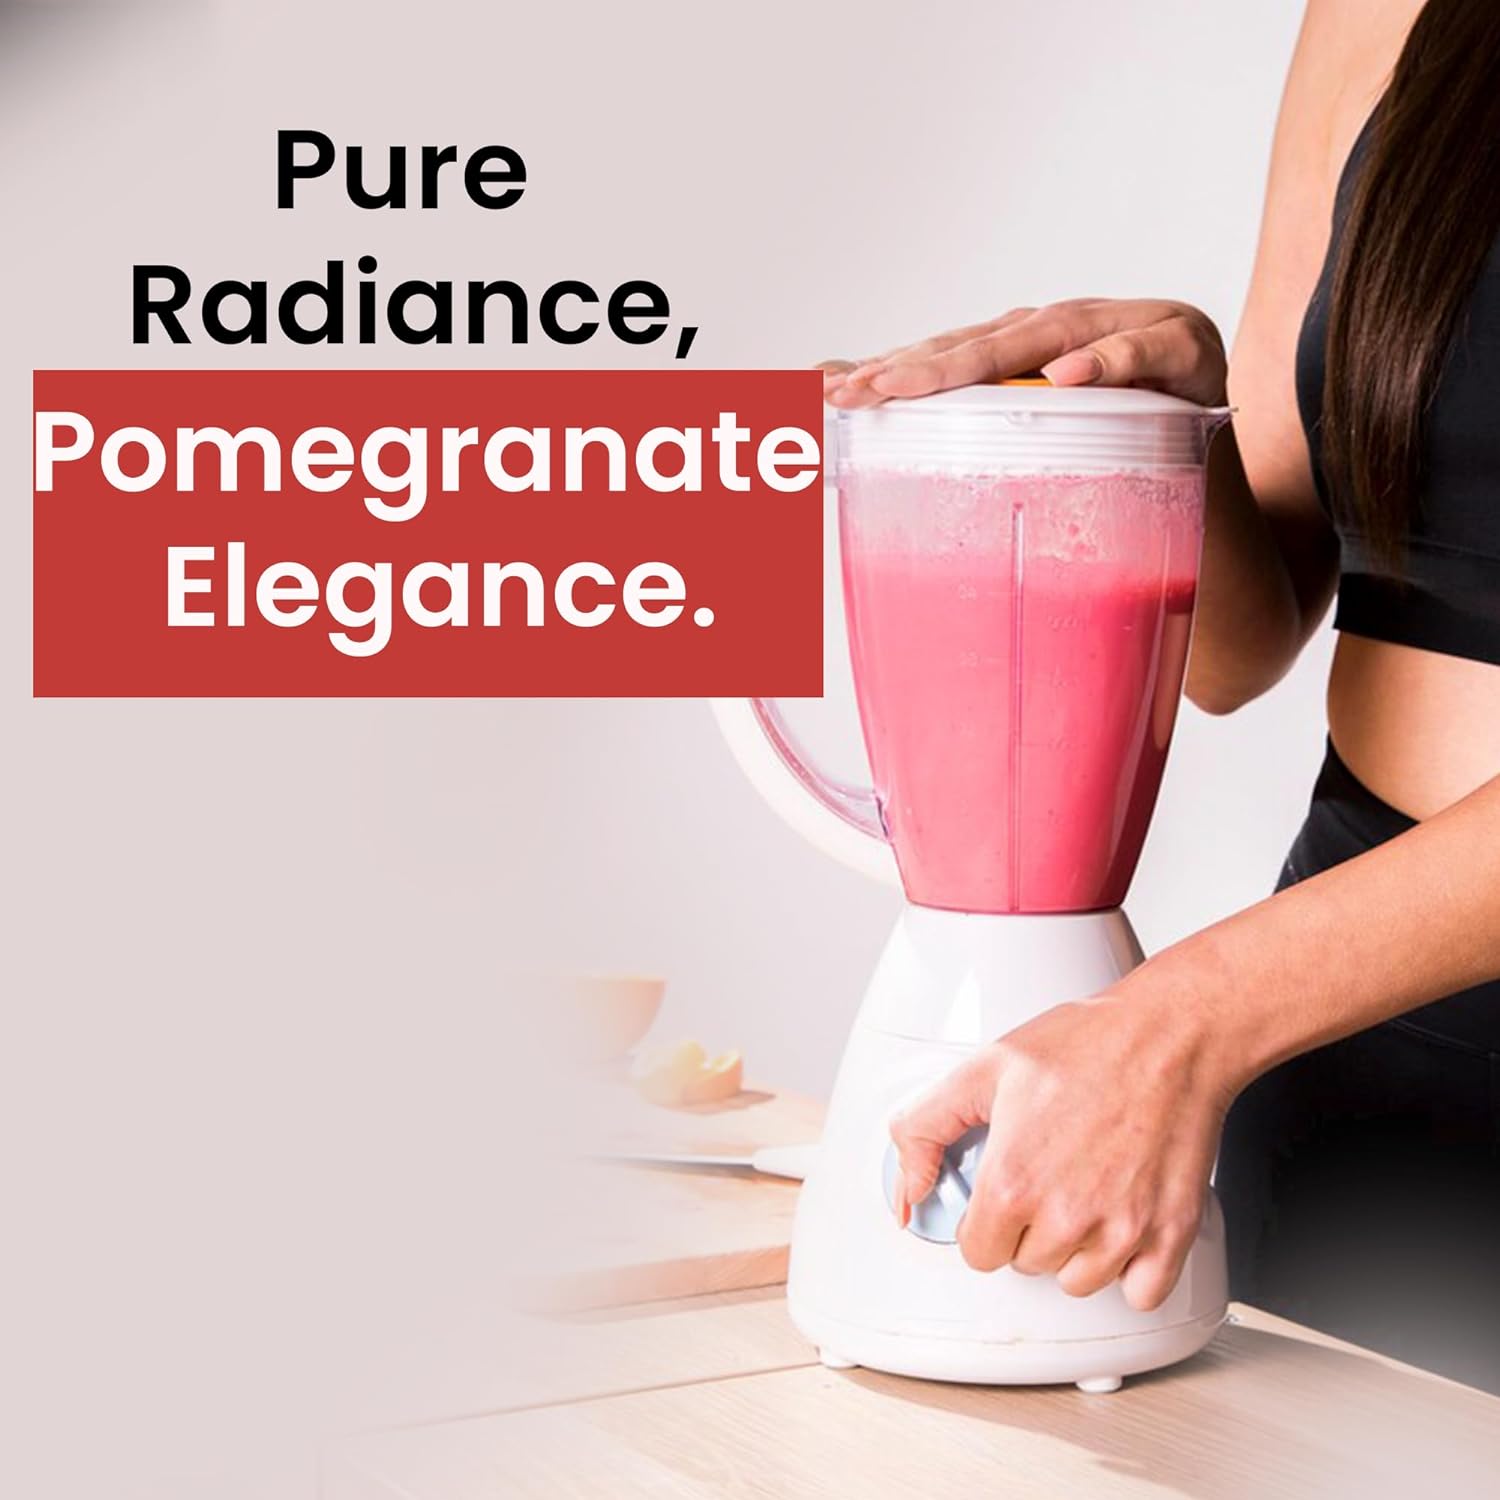 Organic Pomegranate Powder